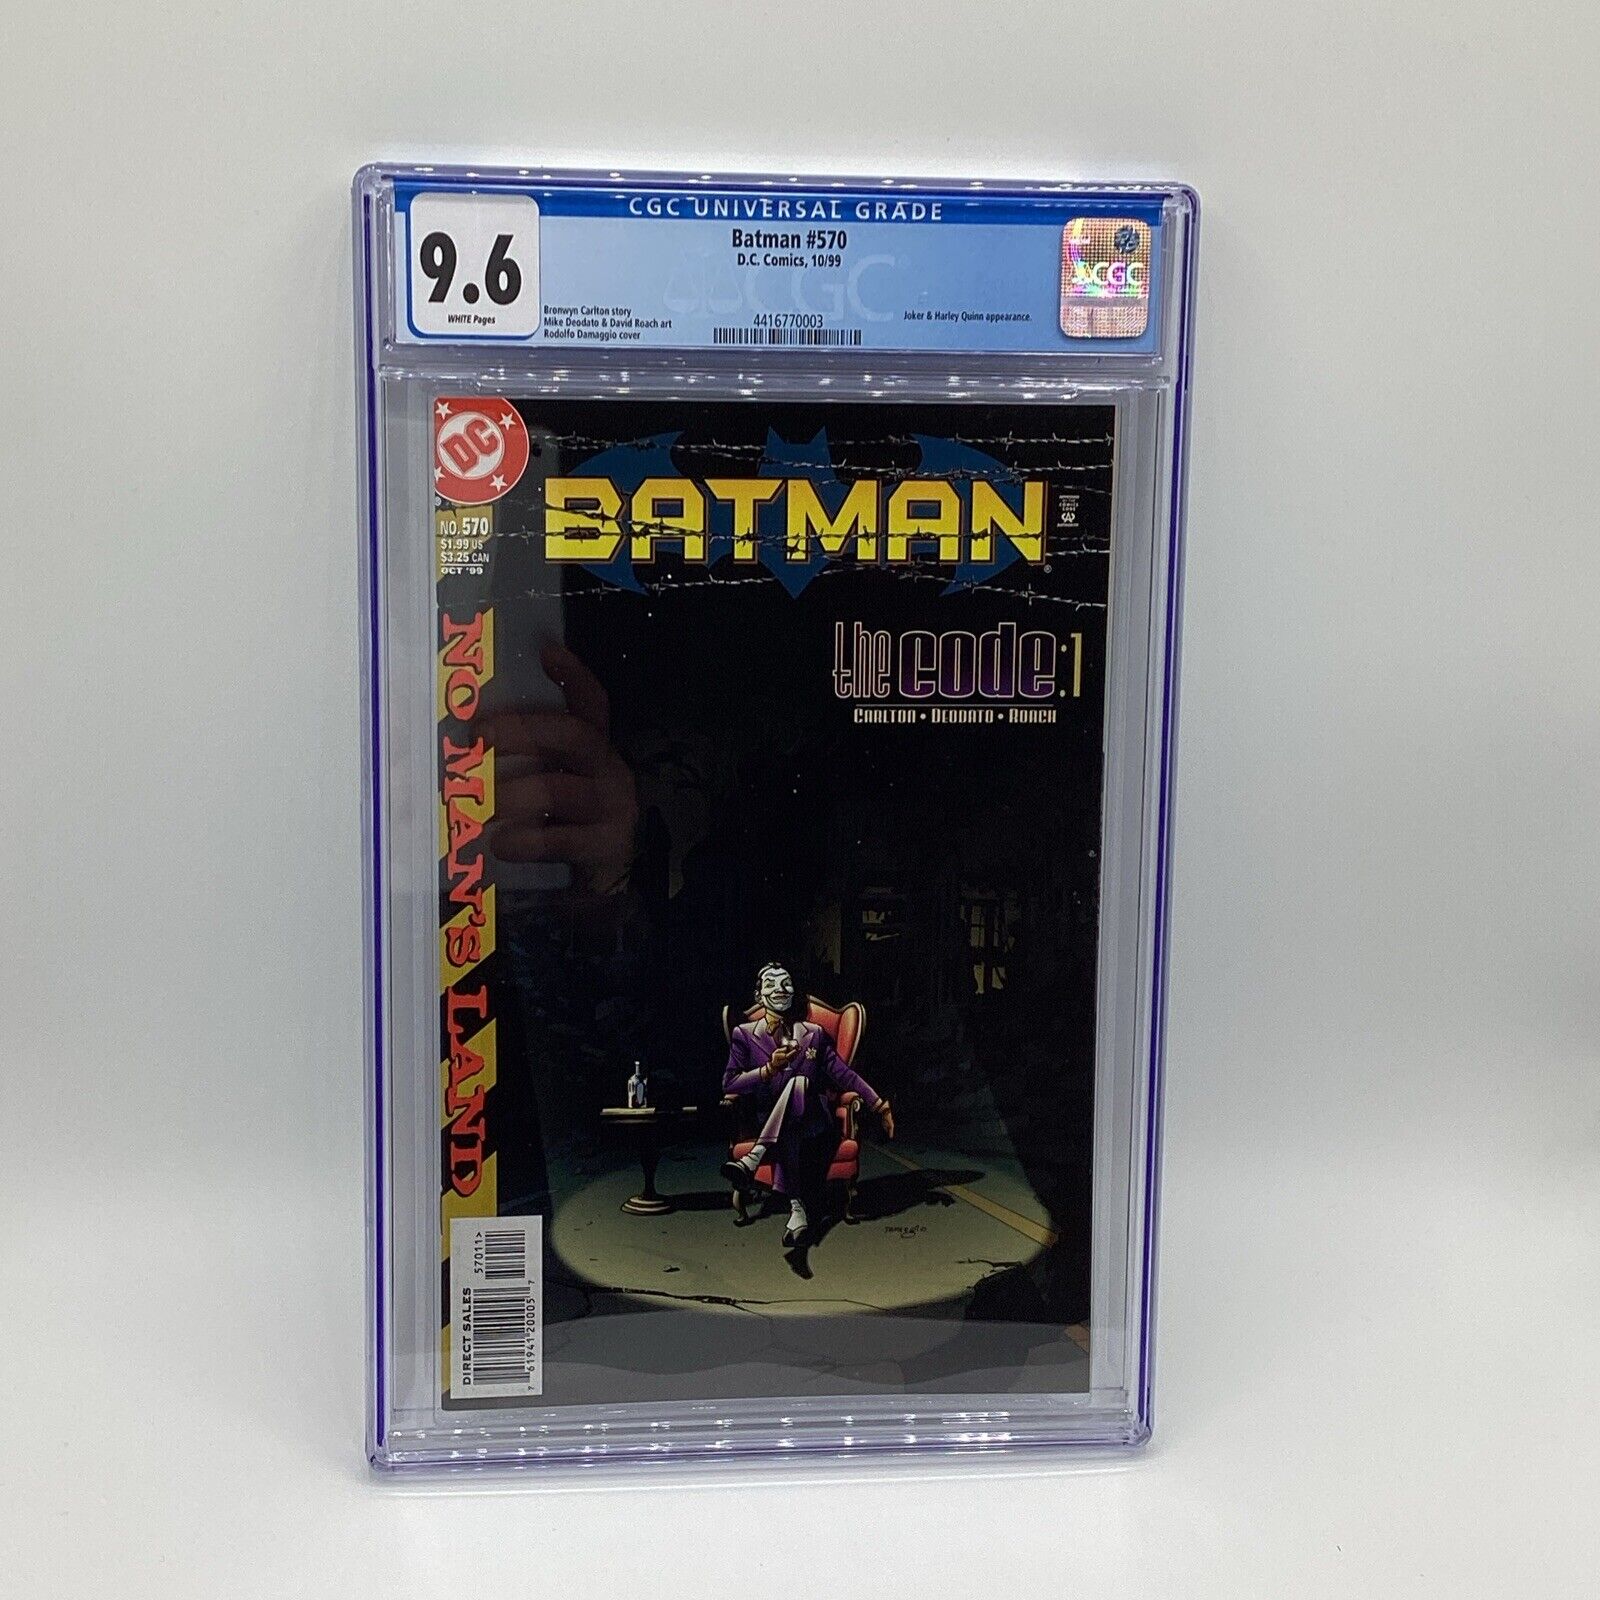 D.C. Comics Batman #570, 10/99 CGC Graded 9.6-Harley Quinn & Joker Appearance